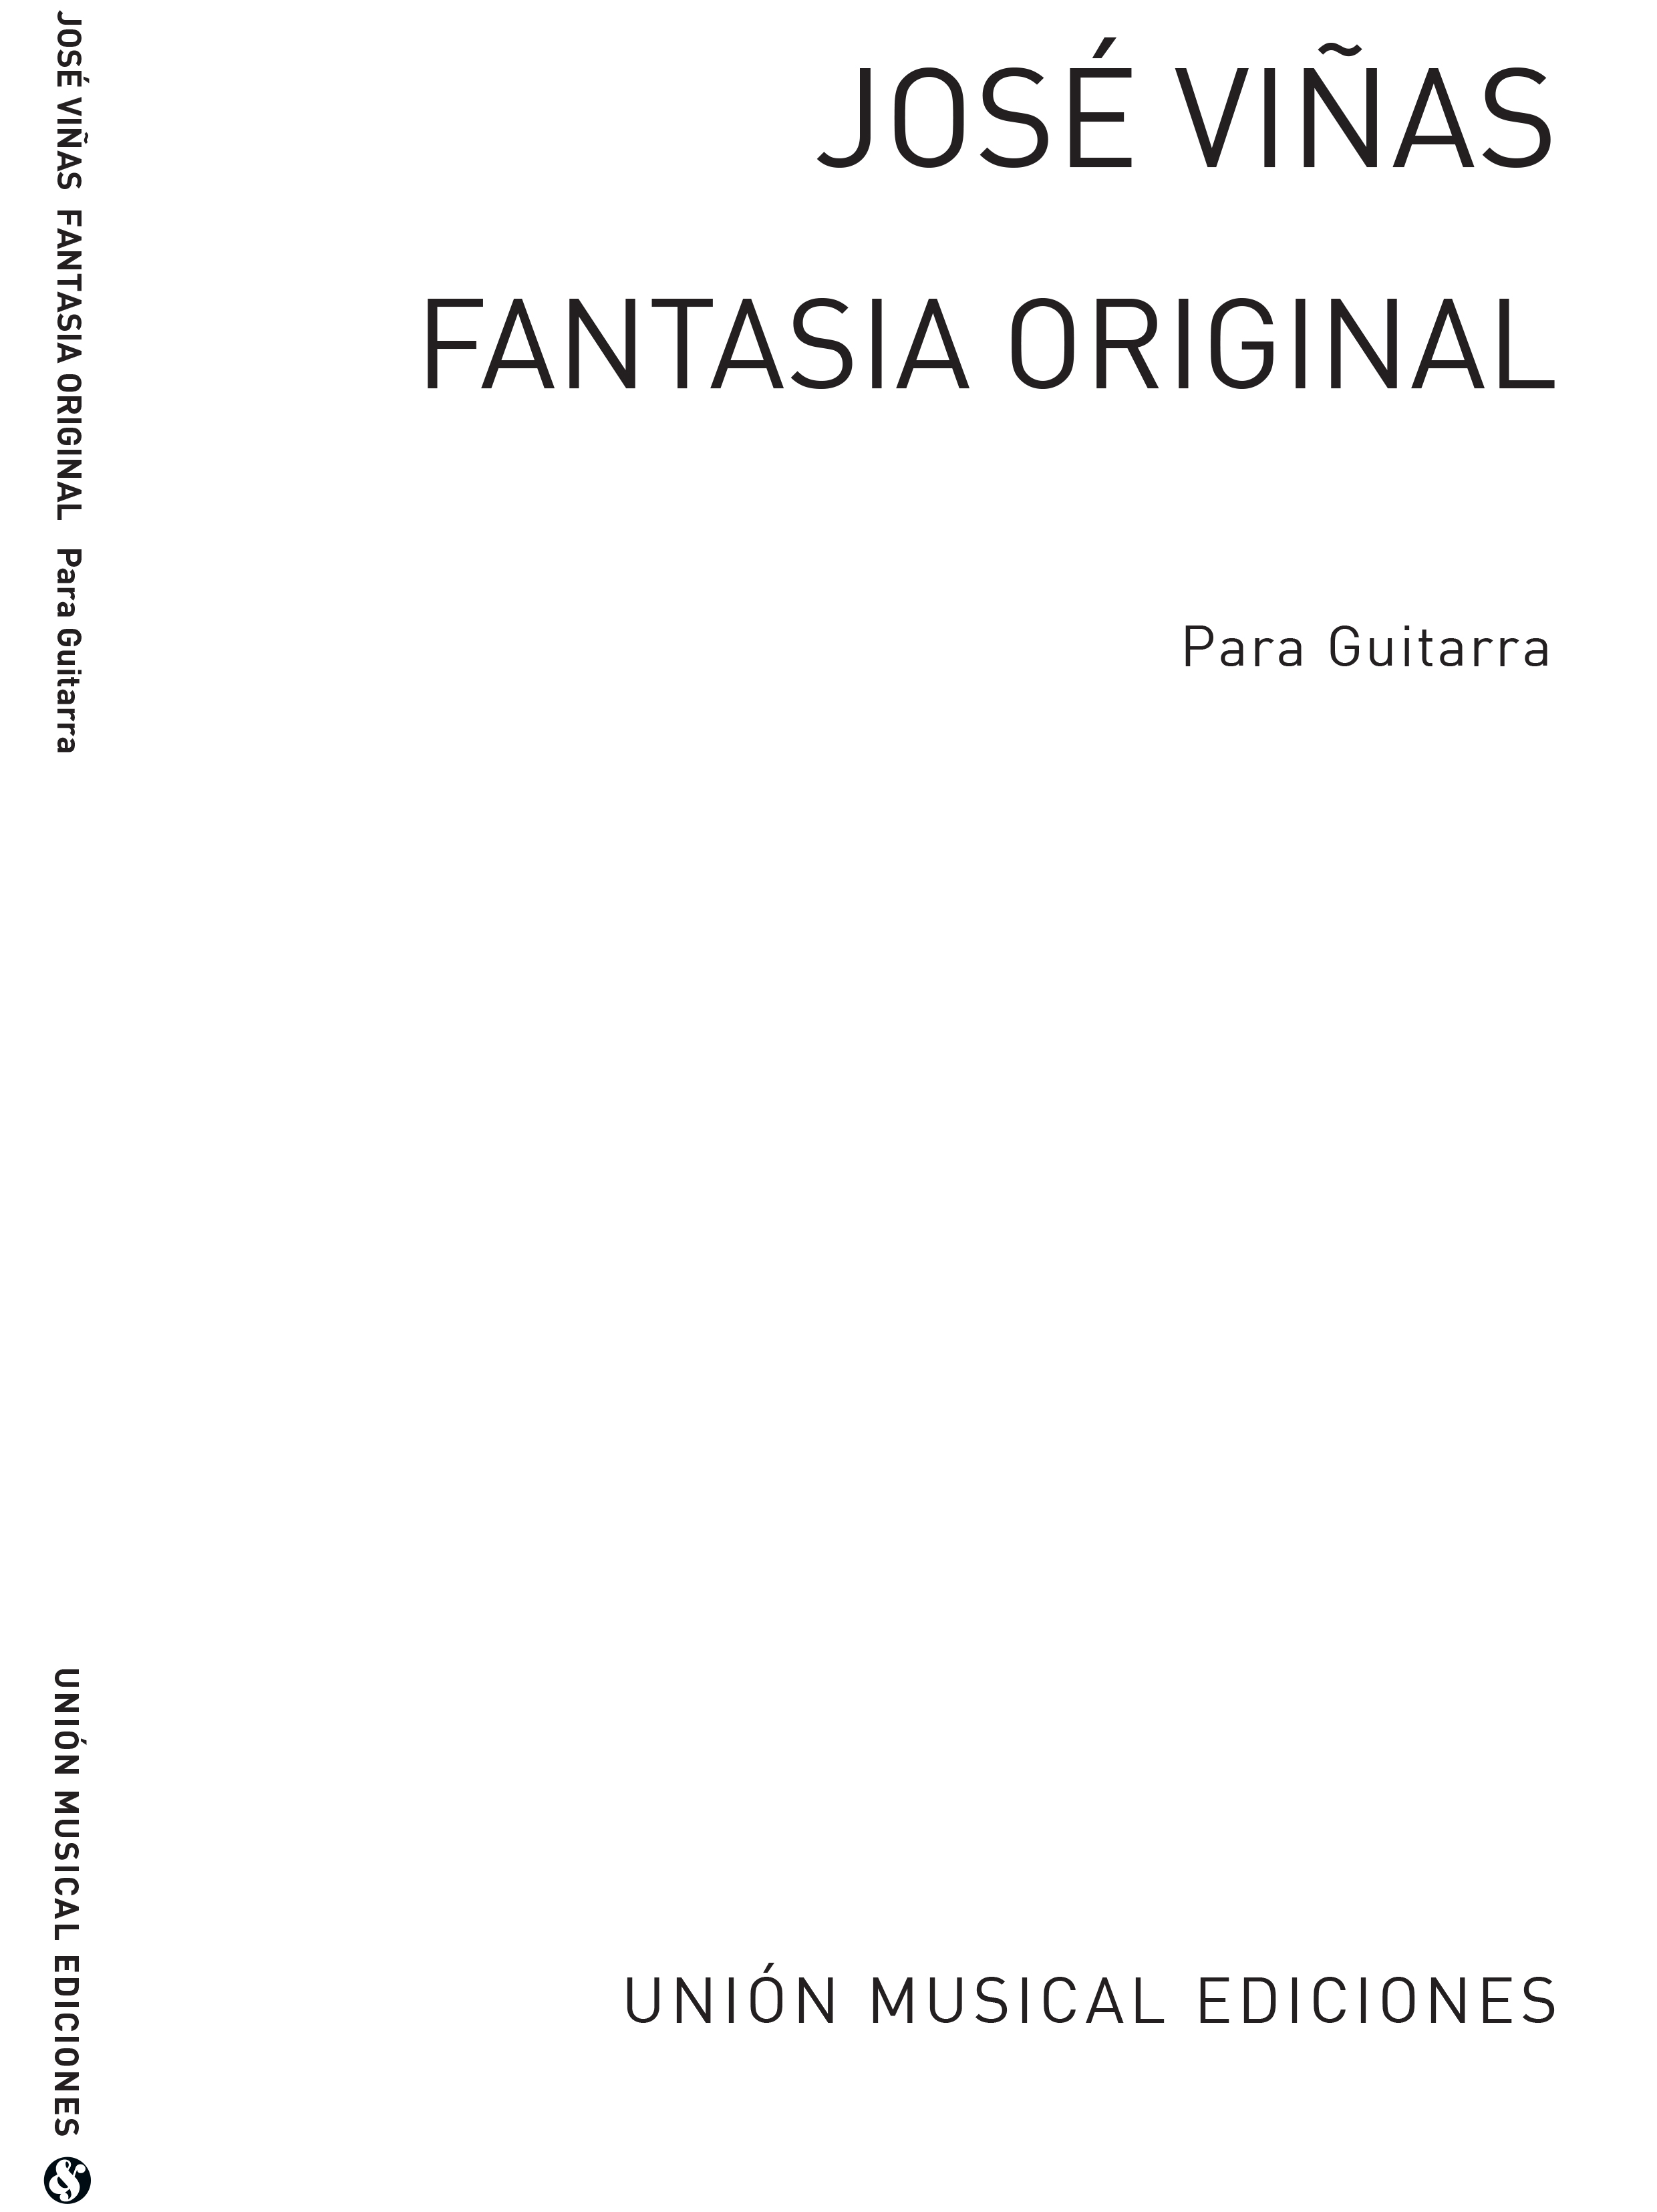 Jos Vinas: Fantasia Original Capricho A Imitacion Del Piano: Guitar: